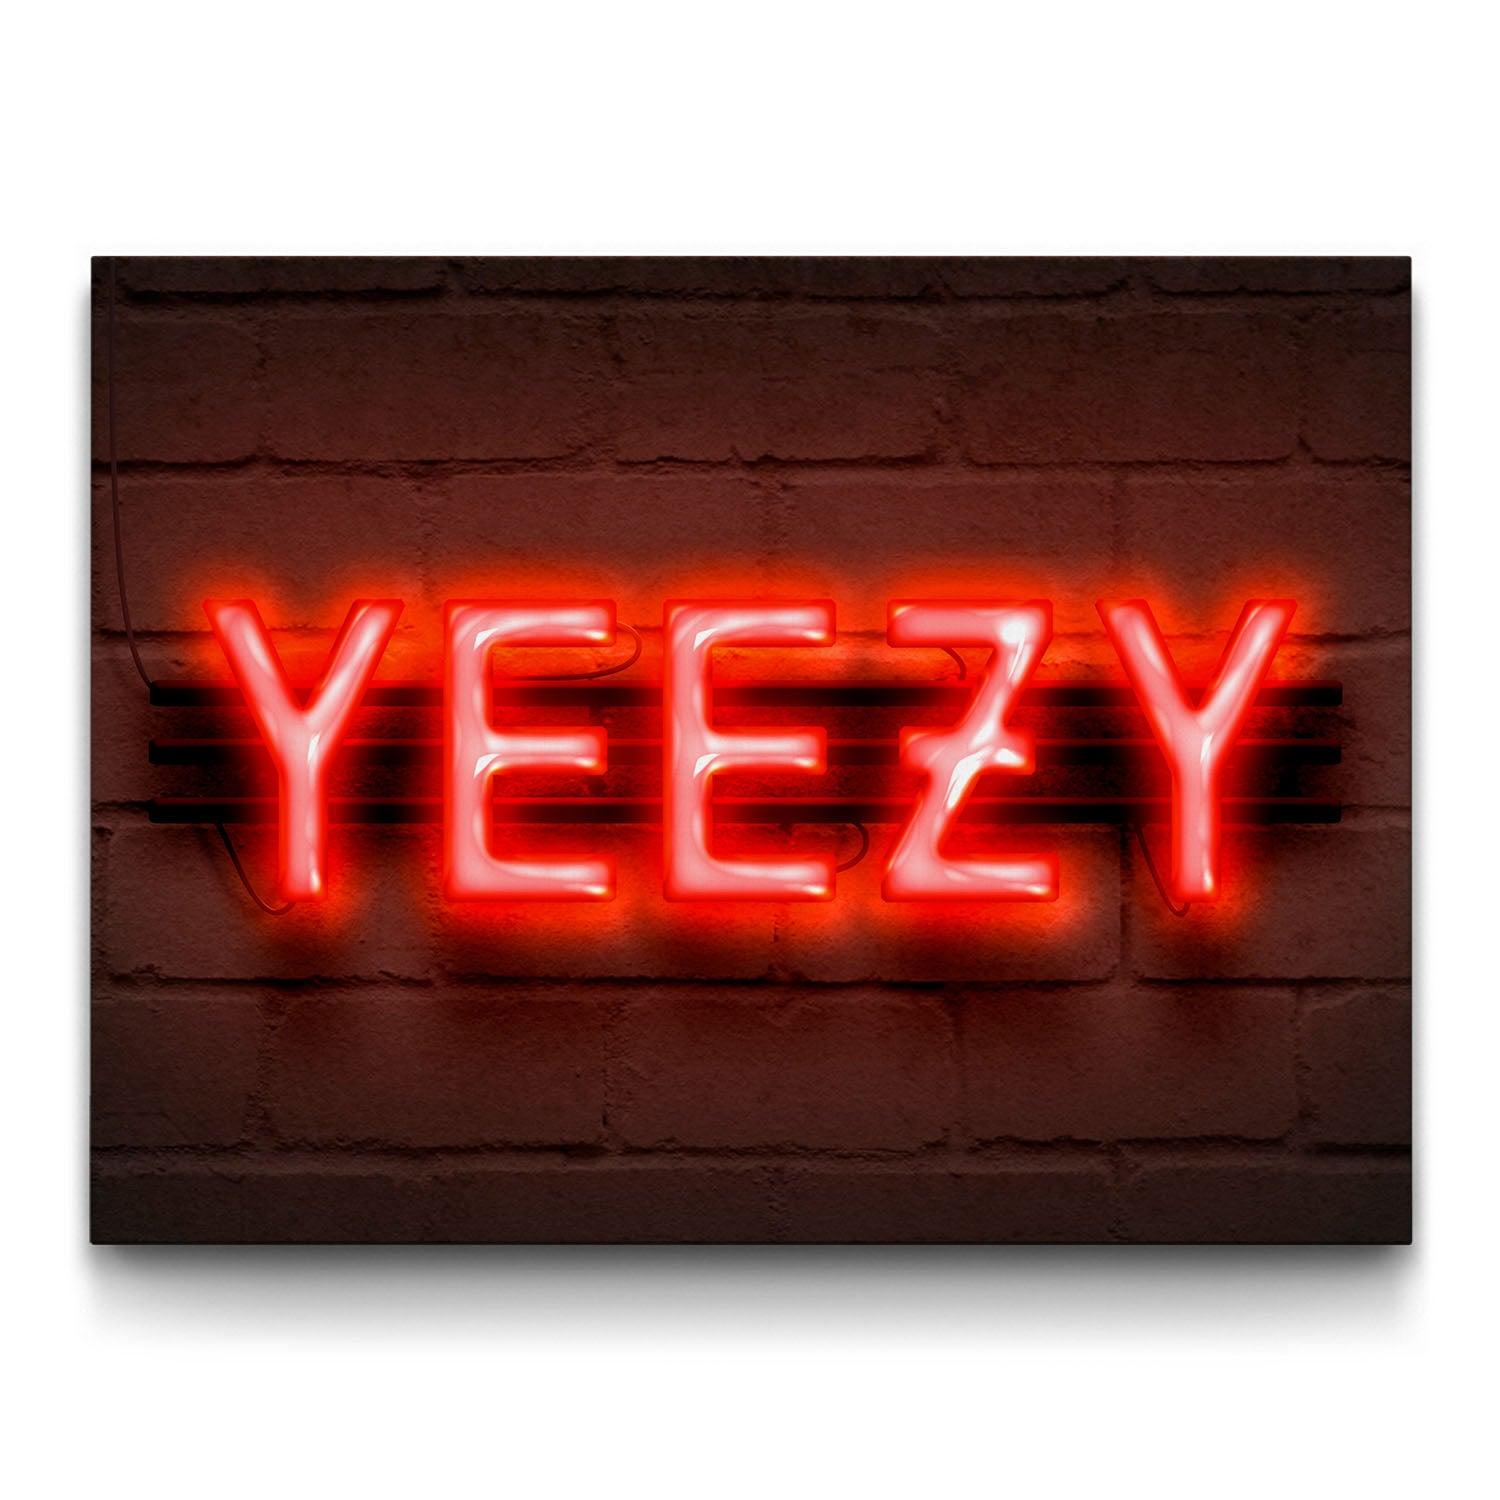 Yeezy | The BLK Gallery